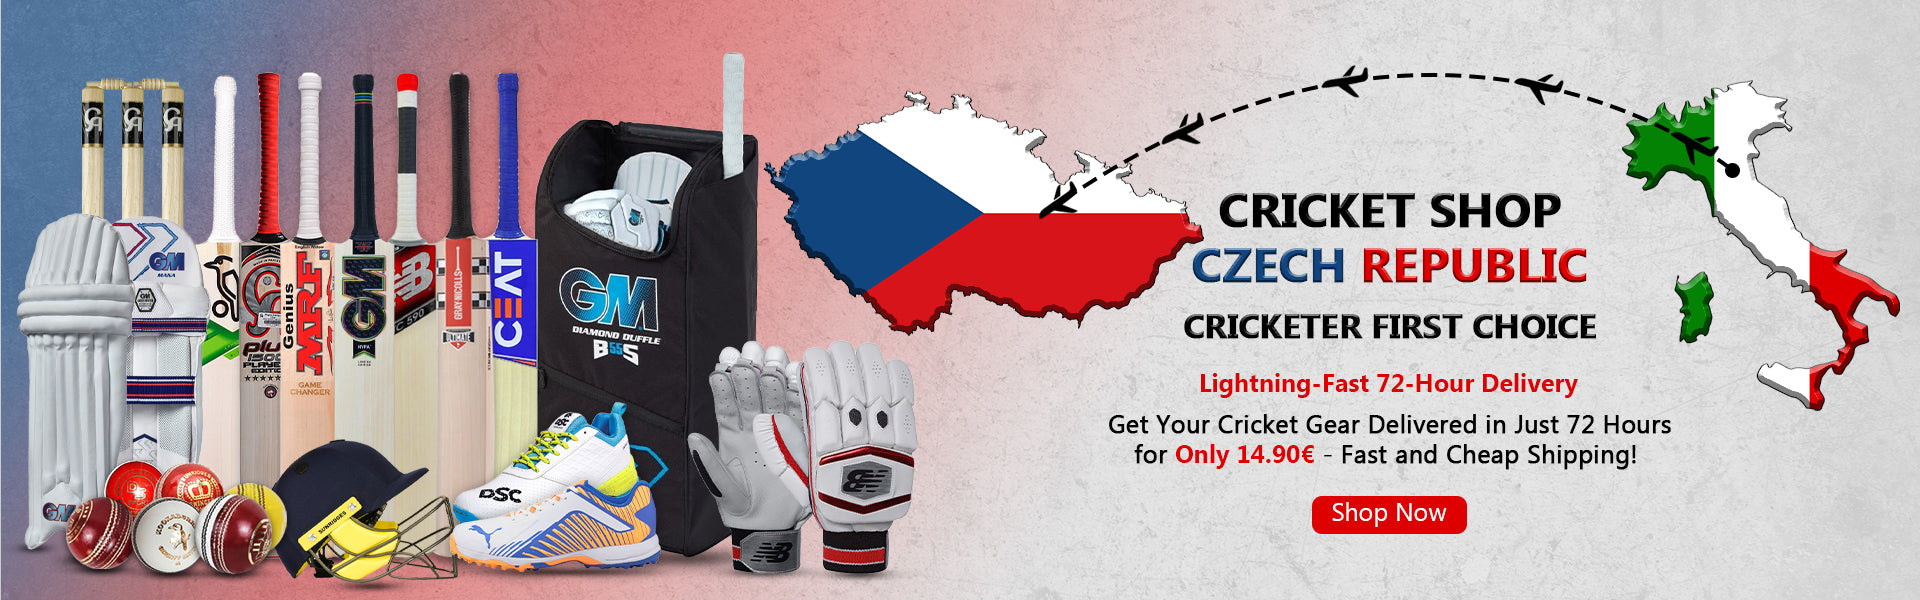 Cricket Shop Czechia | Cricketer first Choice